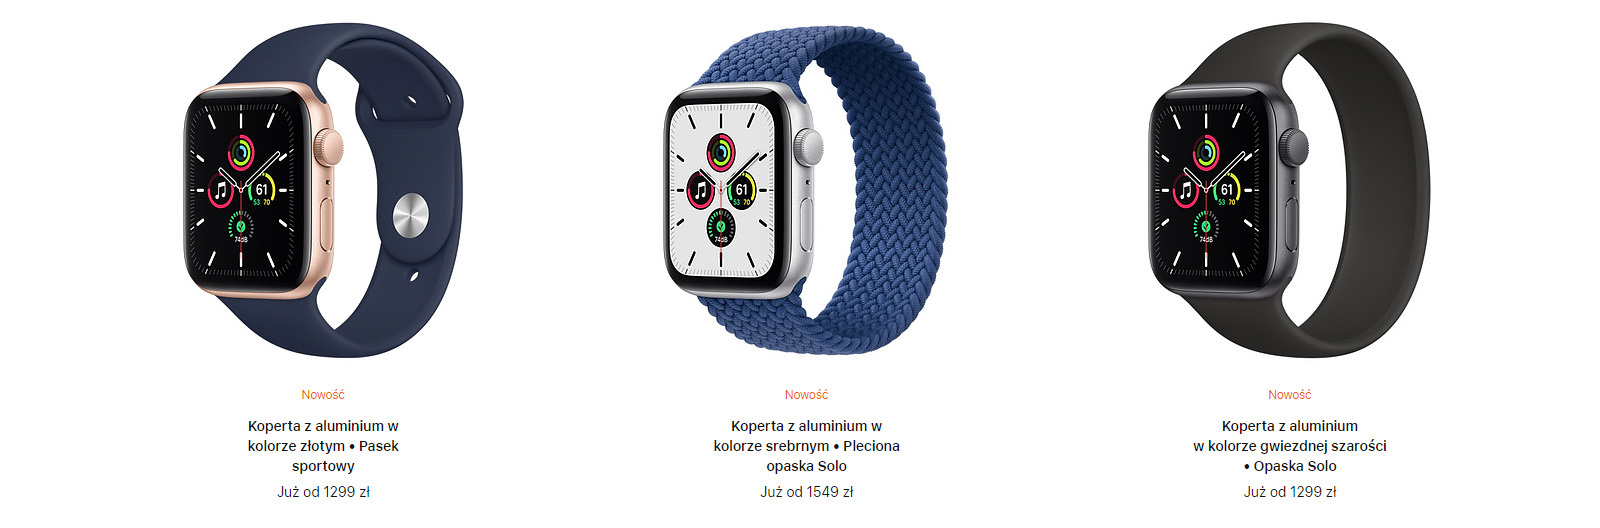 Apple Watch Series 6 i Apple Watch SE ceny